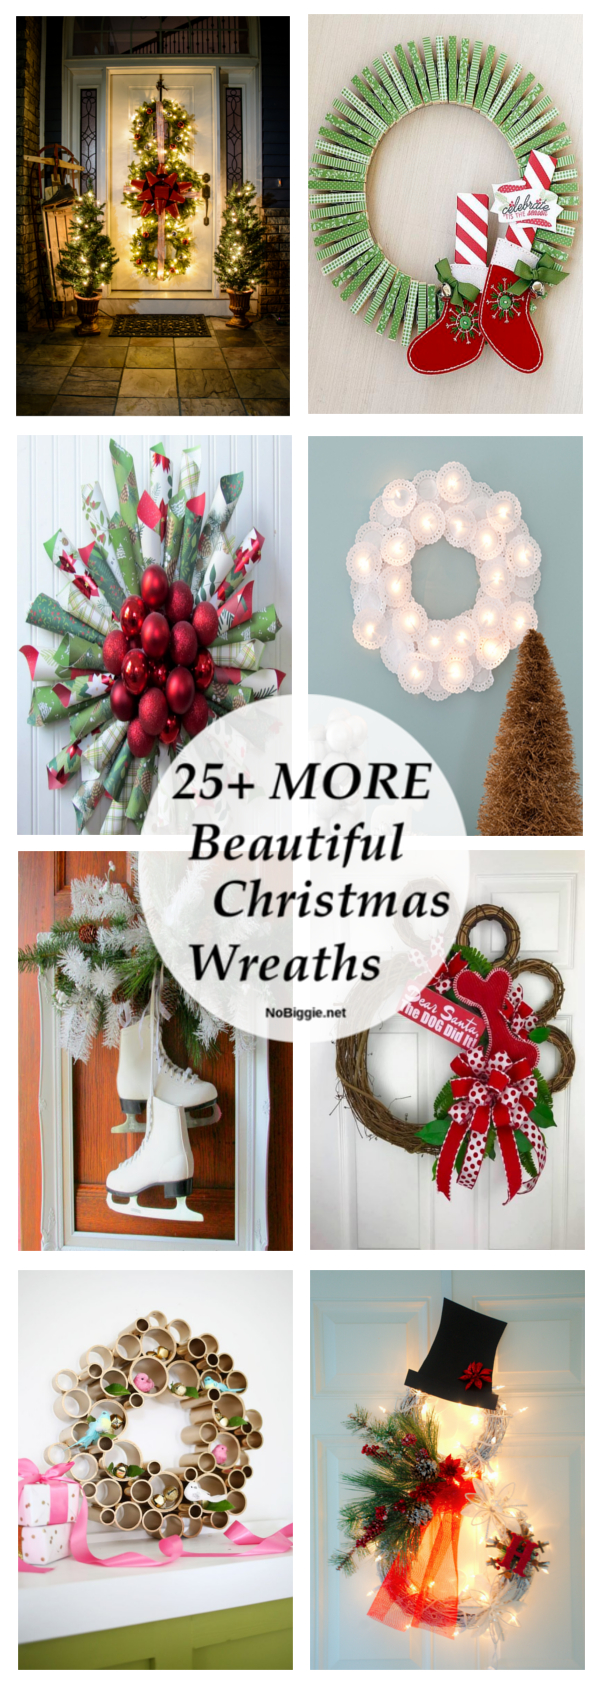 25+ MORE Beautiful Christmas Wreaths | NoBiggie.net